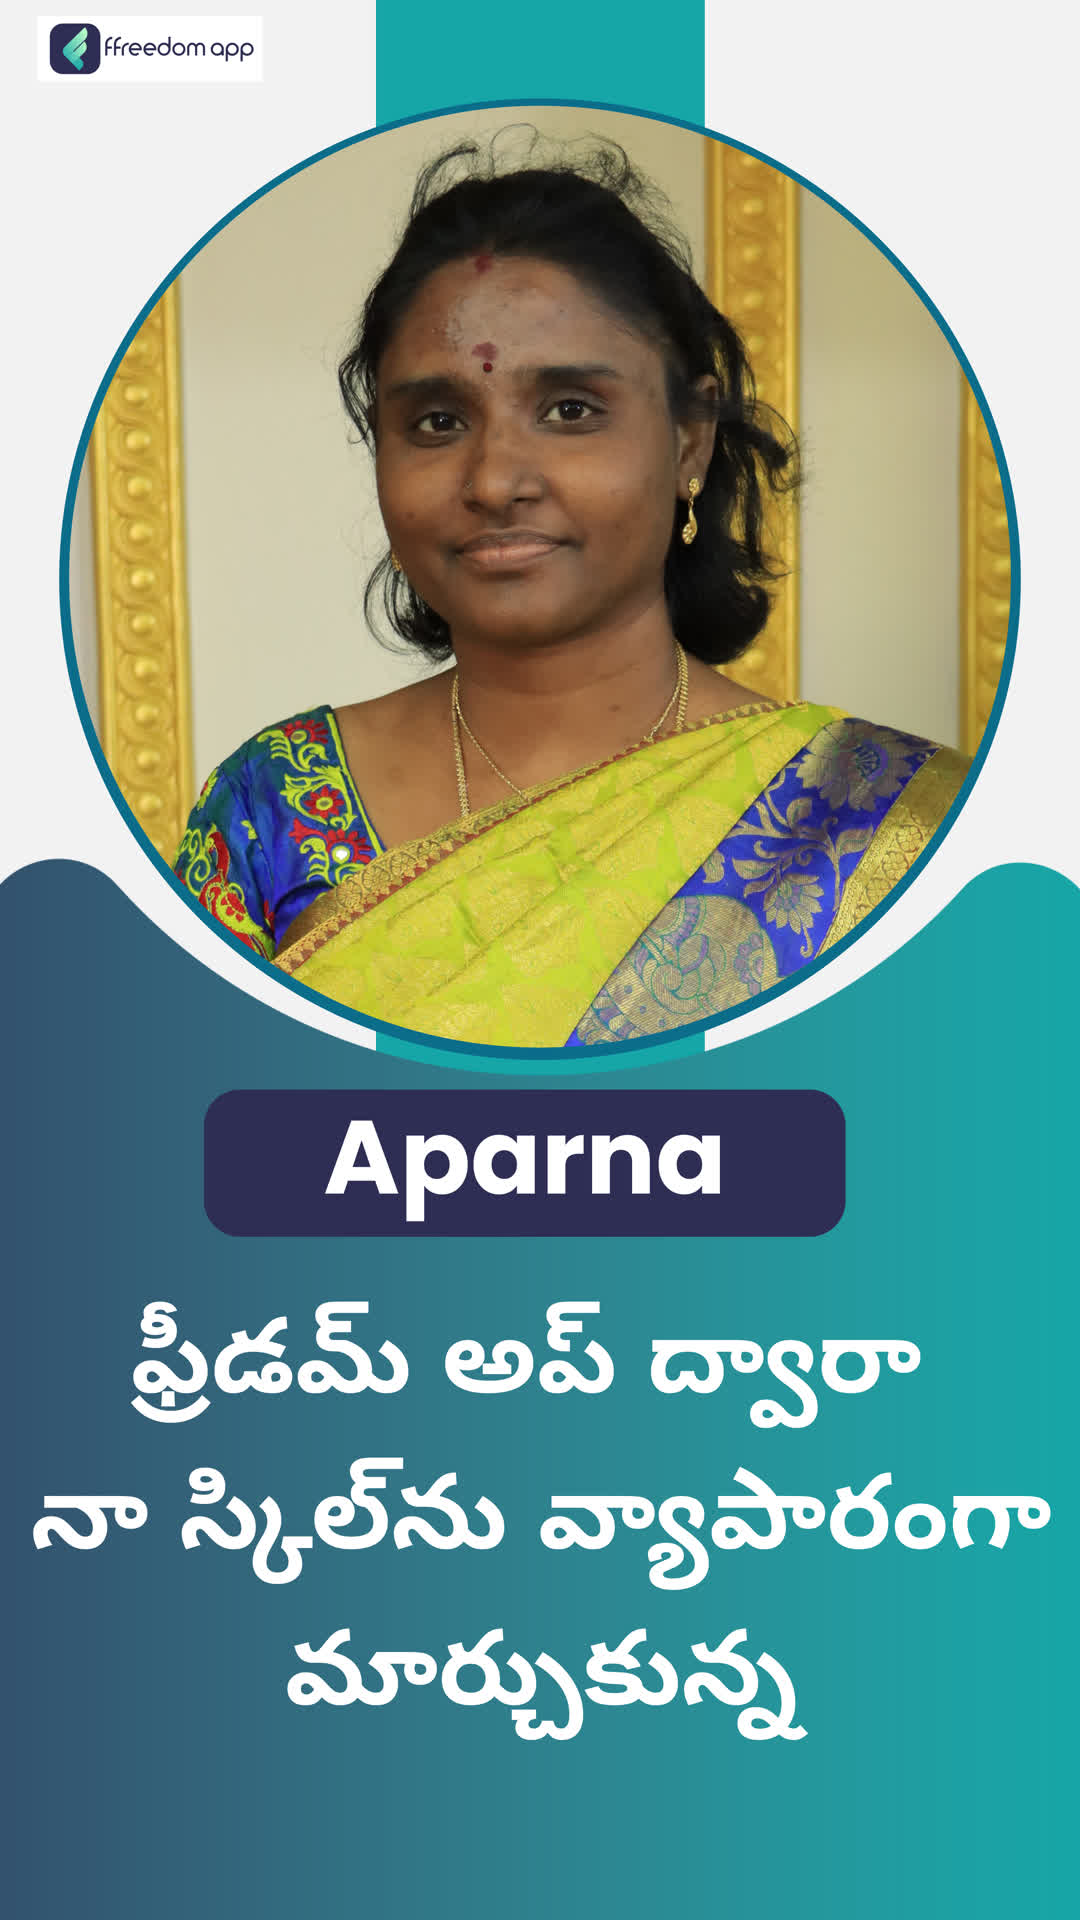 Aparna Muppalla's Honest Review of ffreedom app - Hyderabad ,Telangana